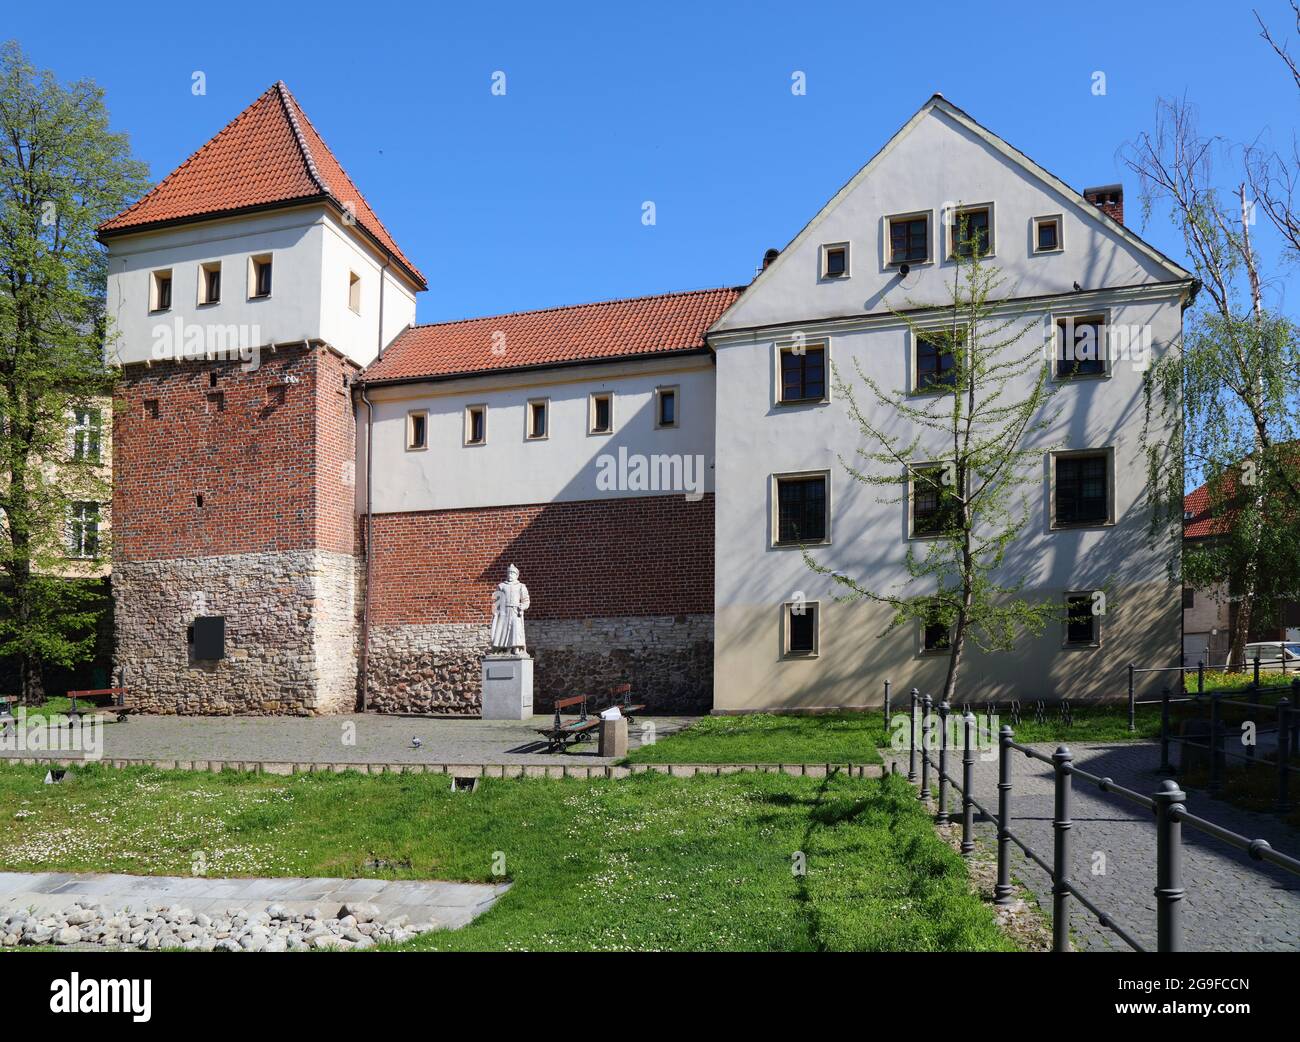 Gliwice Stadt in Polen. Schloss Piast (Zamek Piastowski) von Gliwice. Stockfoto